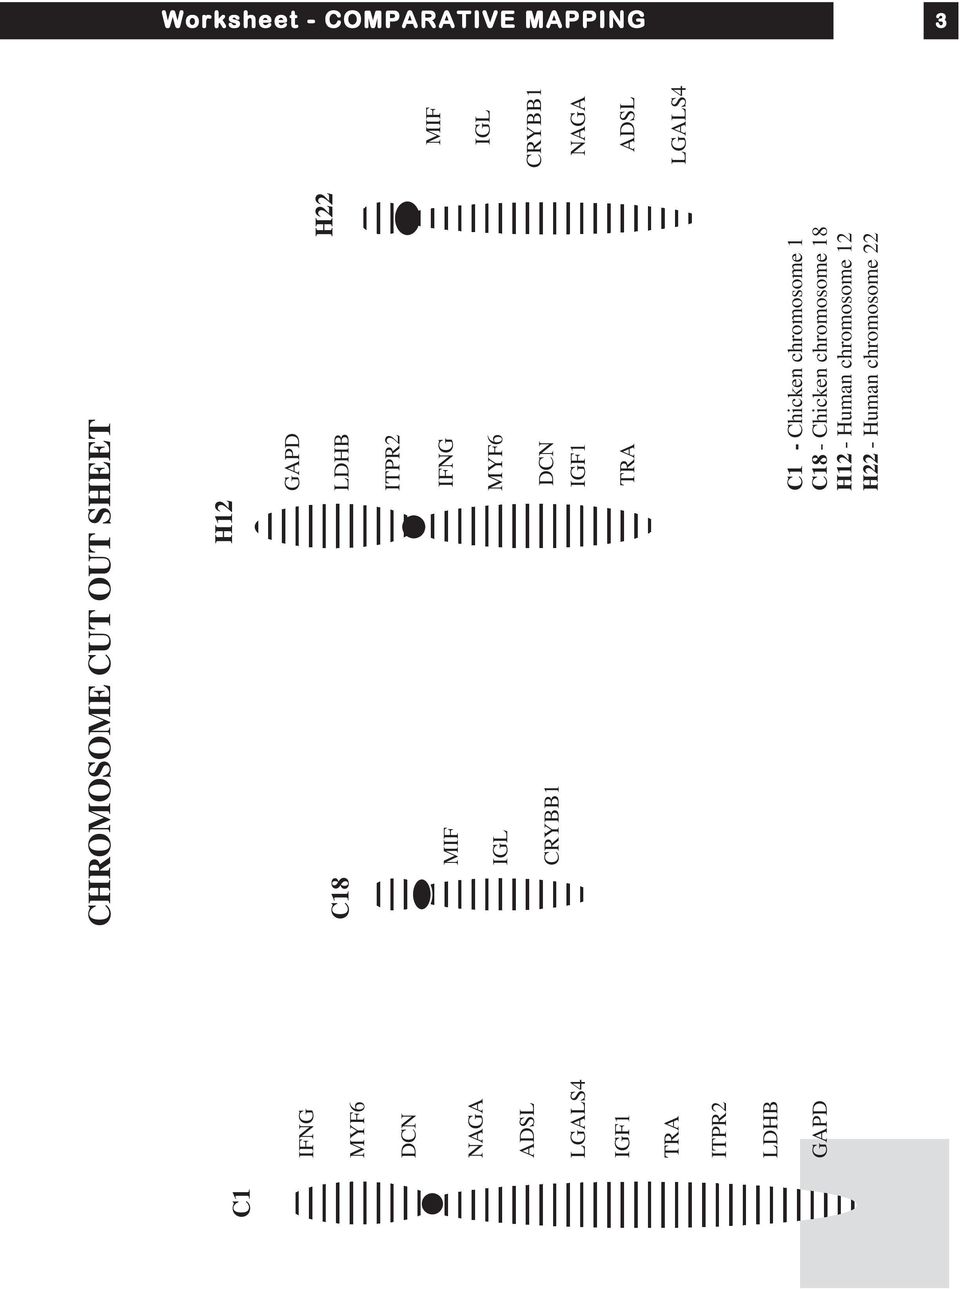 Chicken chromosome 18 H12 - Human chromosome 12 H22